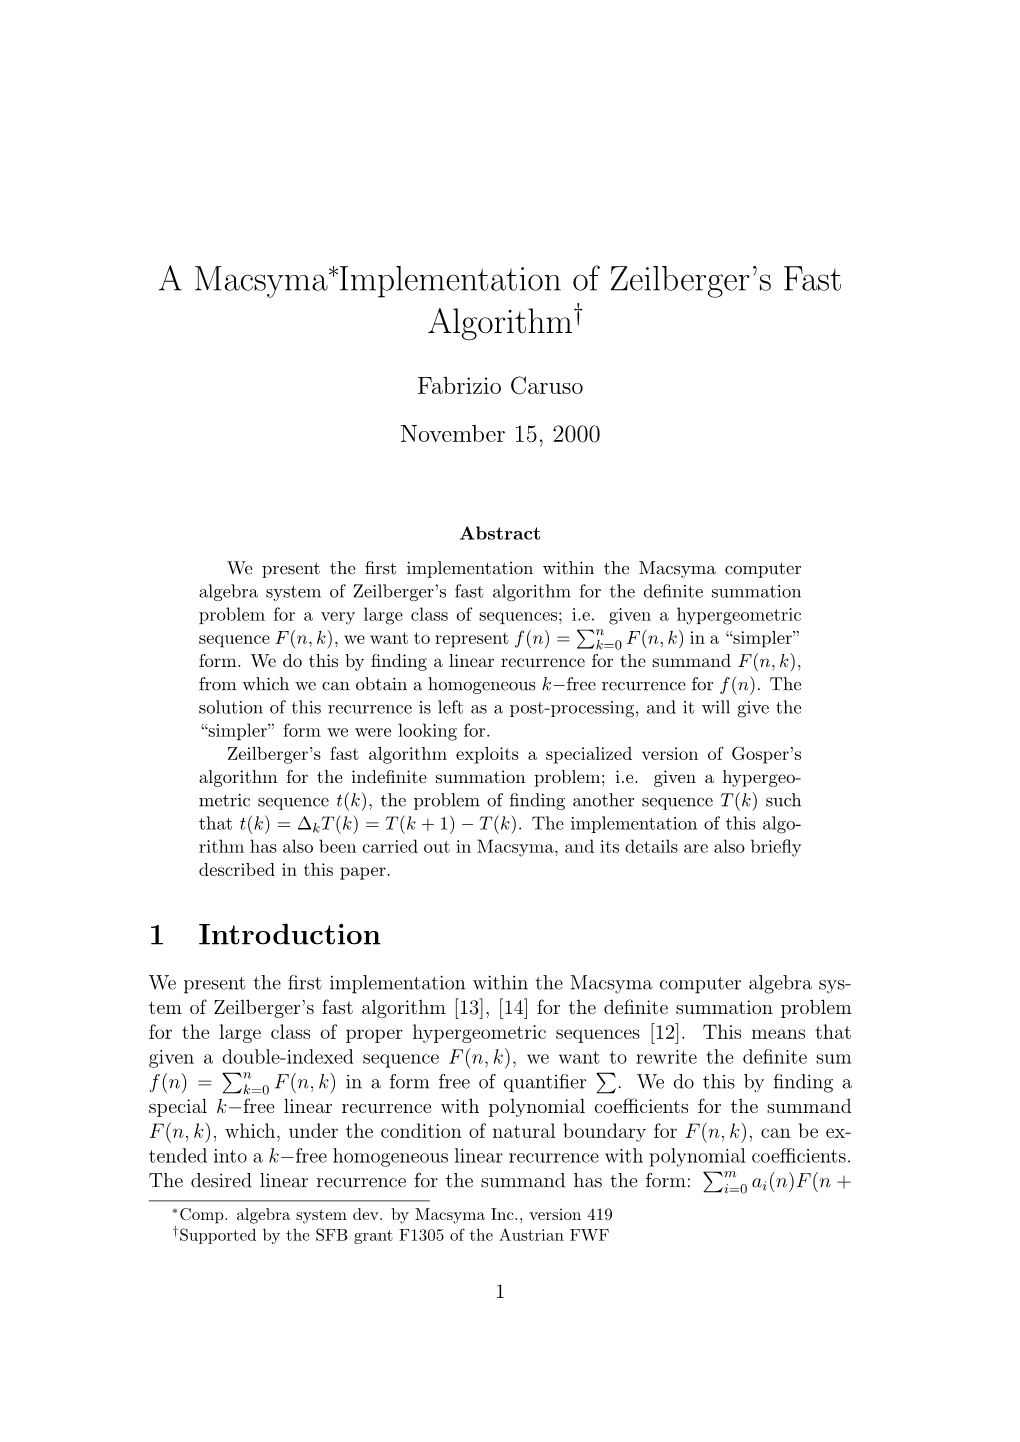 A Macsyma Implementation of Zeilberger's Fast Algorithm